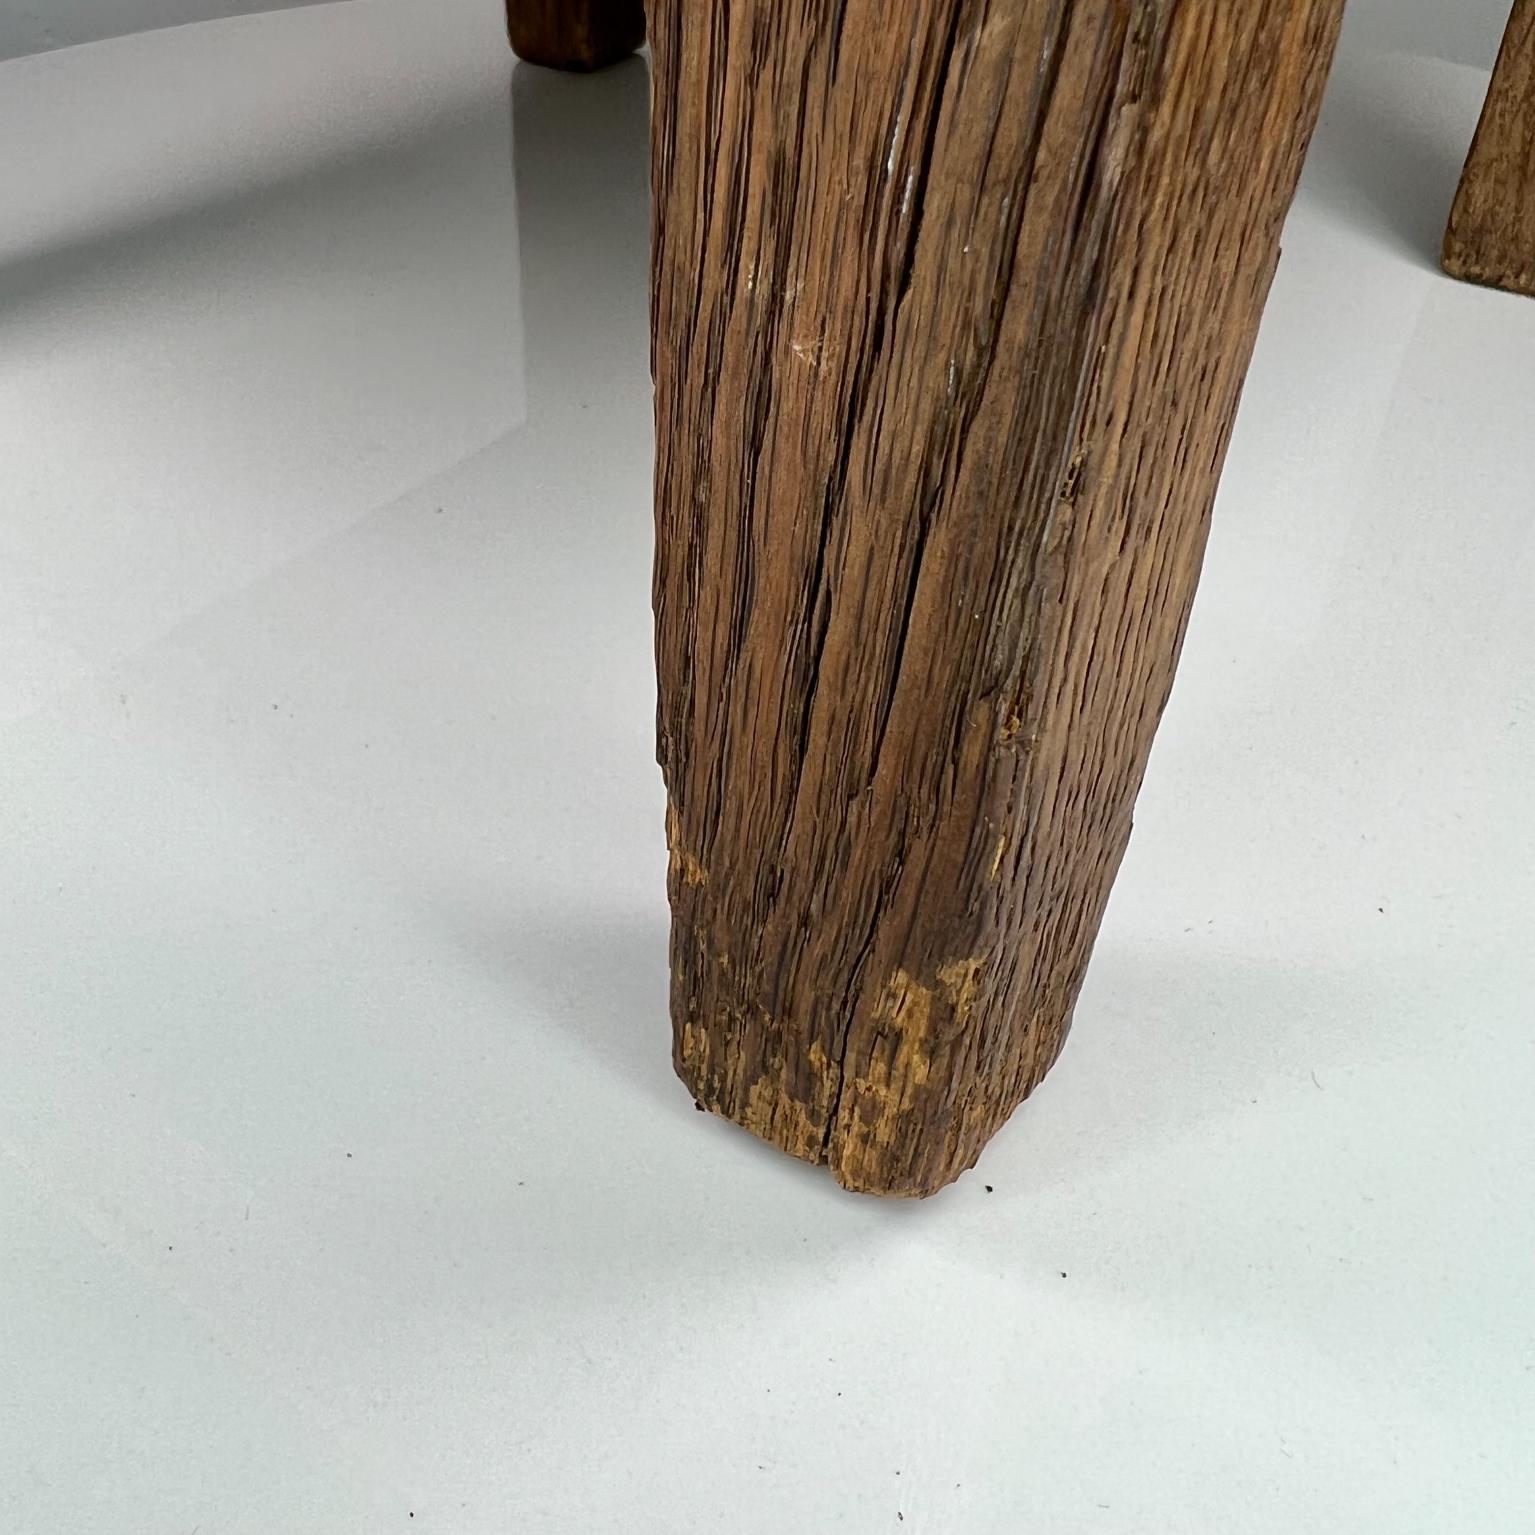 Knaus Mfg. Arts and Crafts niedriger Fußhocker aus Leder und Holz im Used-Look, Oneida, NY im Angebot 4